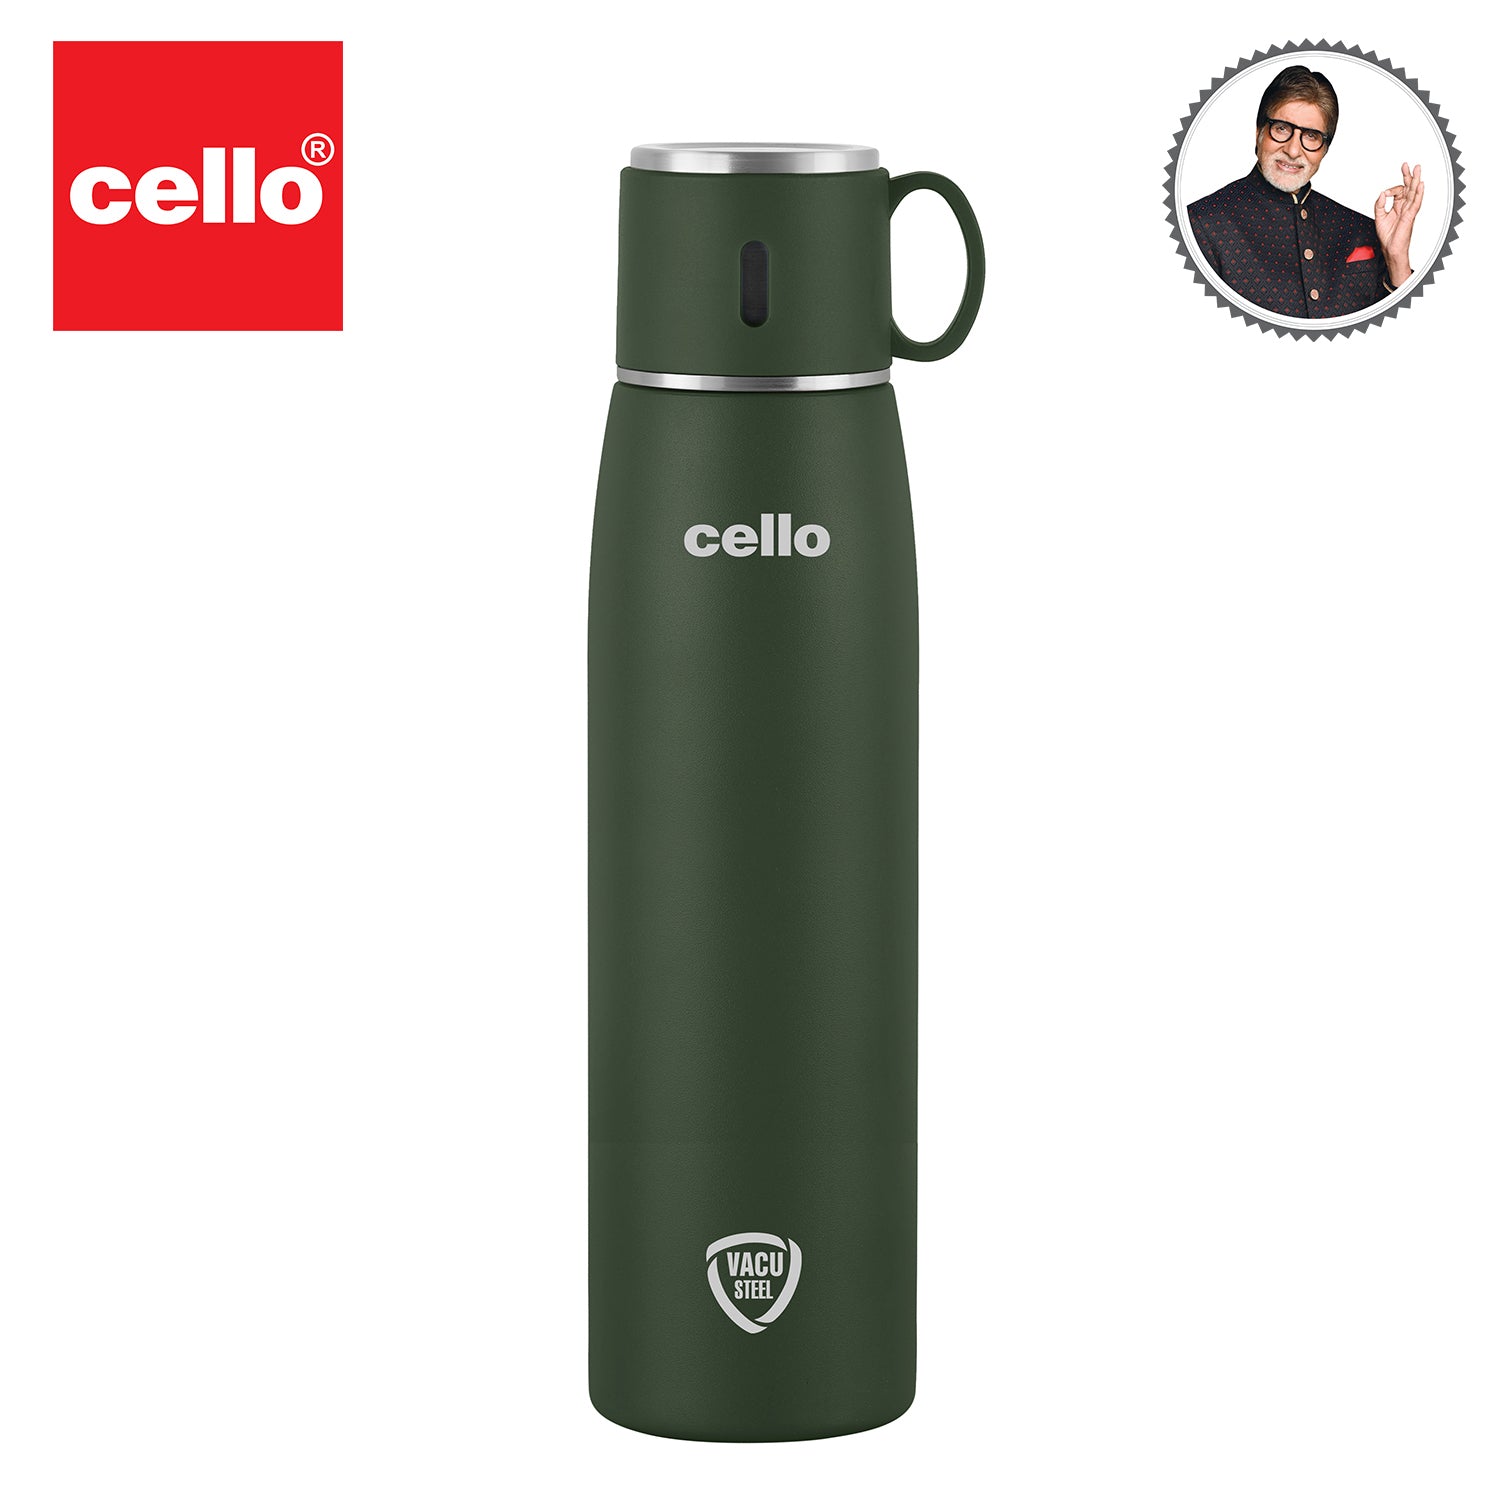 Duro Cup Style Flask, Vacusteel Water Bottle 750ml Green / 750ml